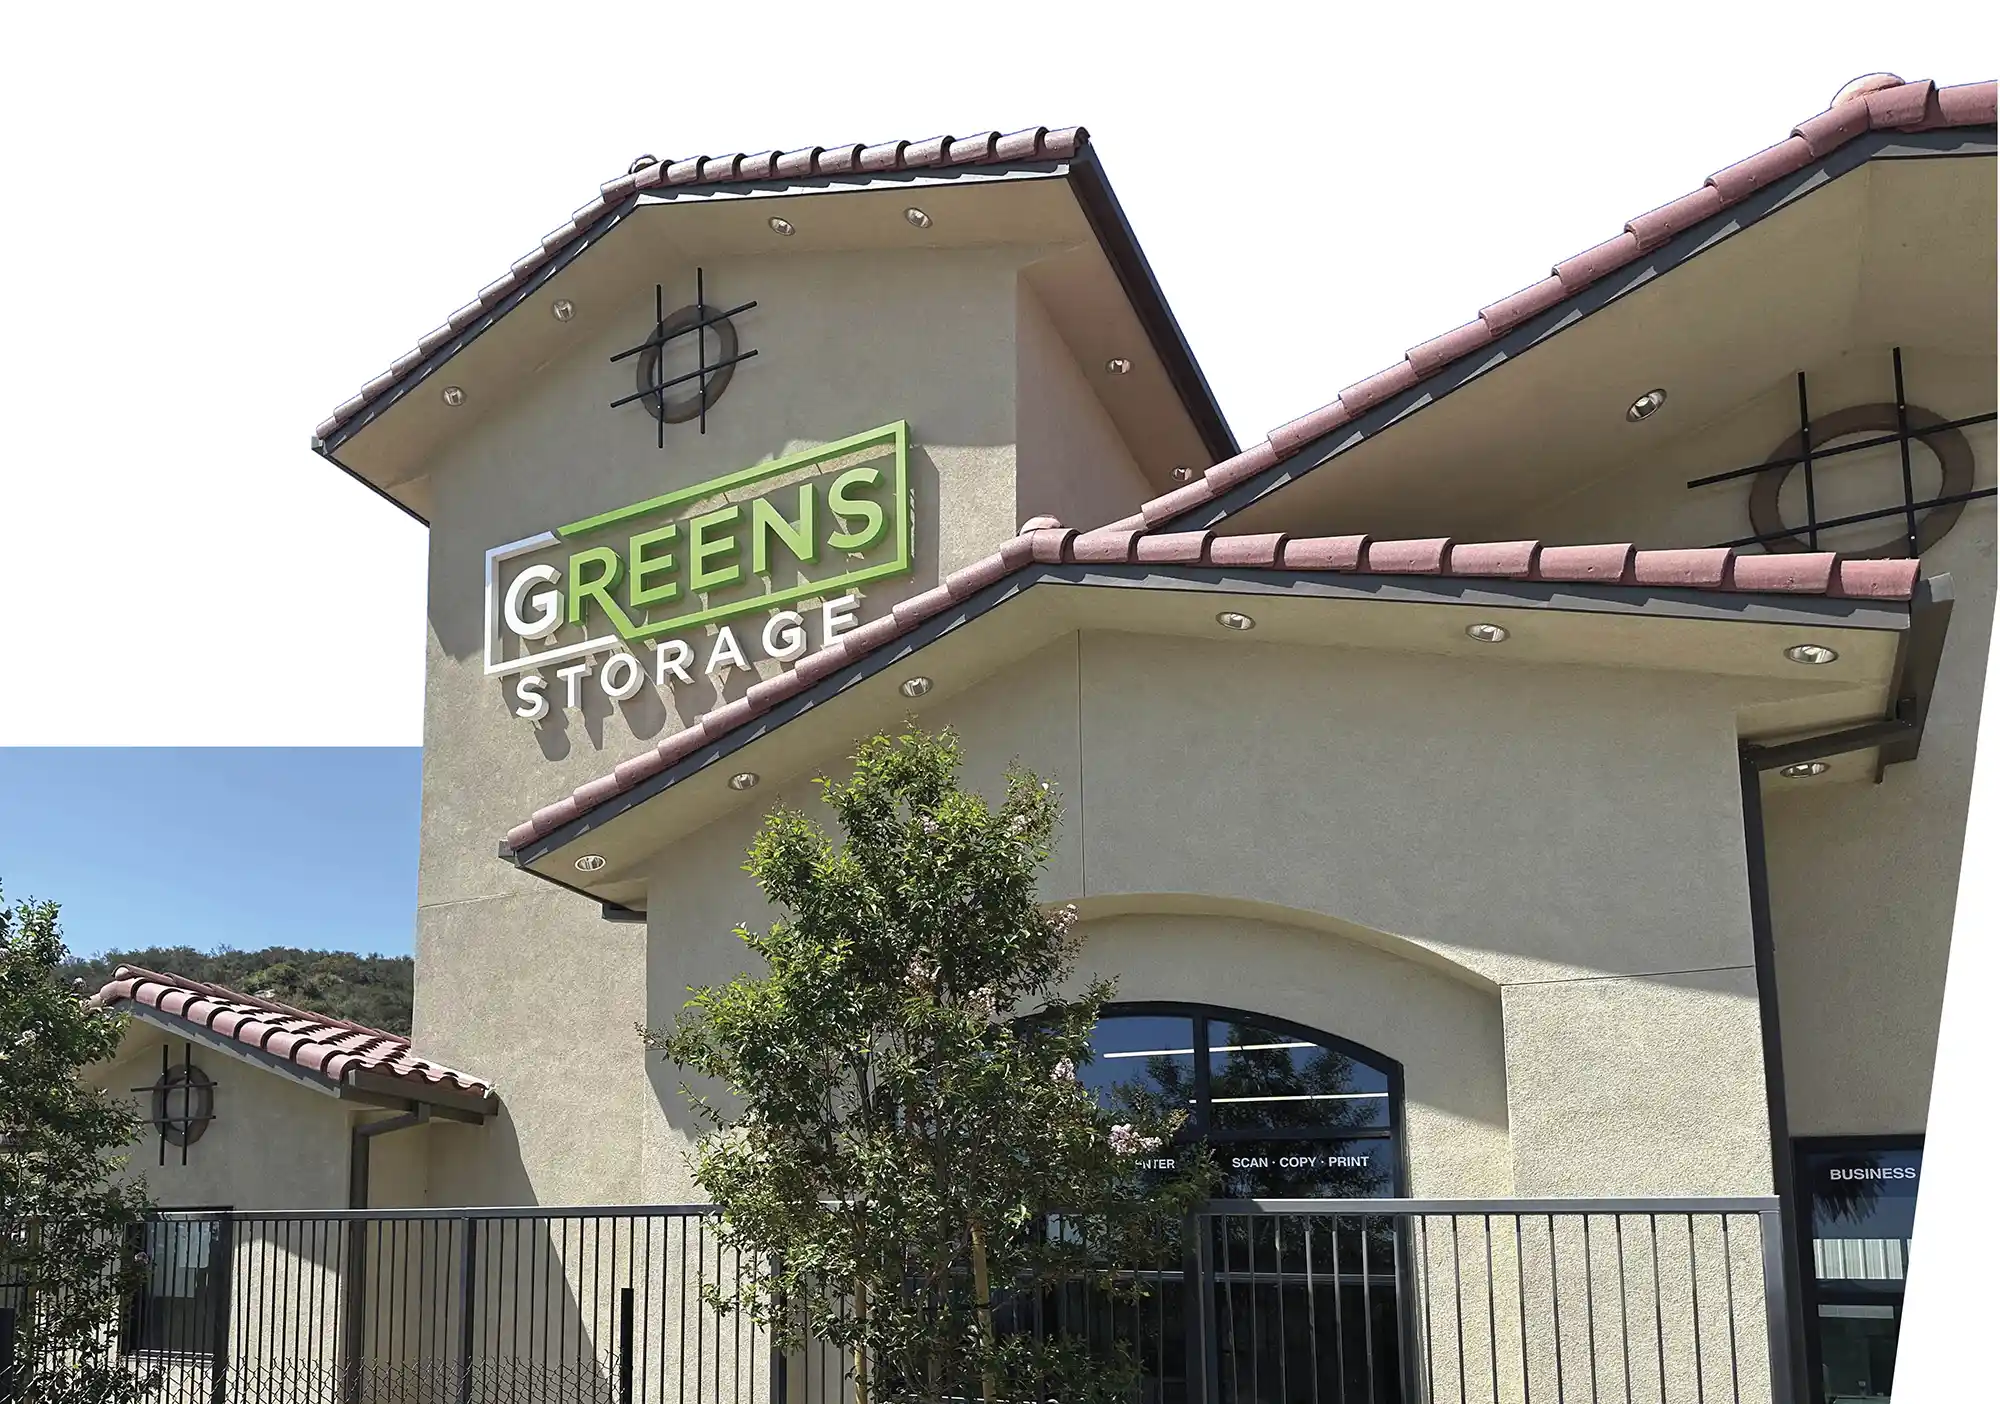 Greens Storage building